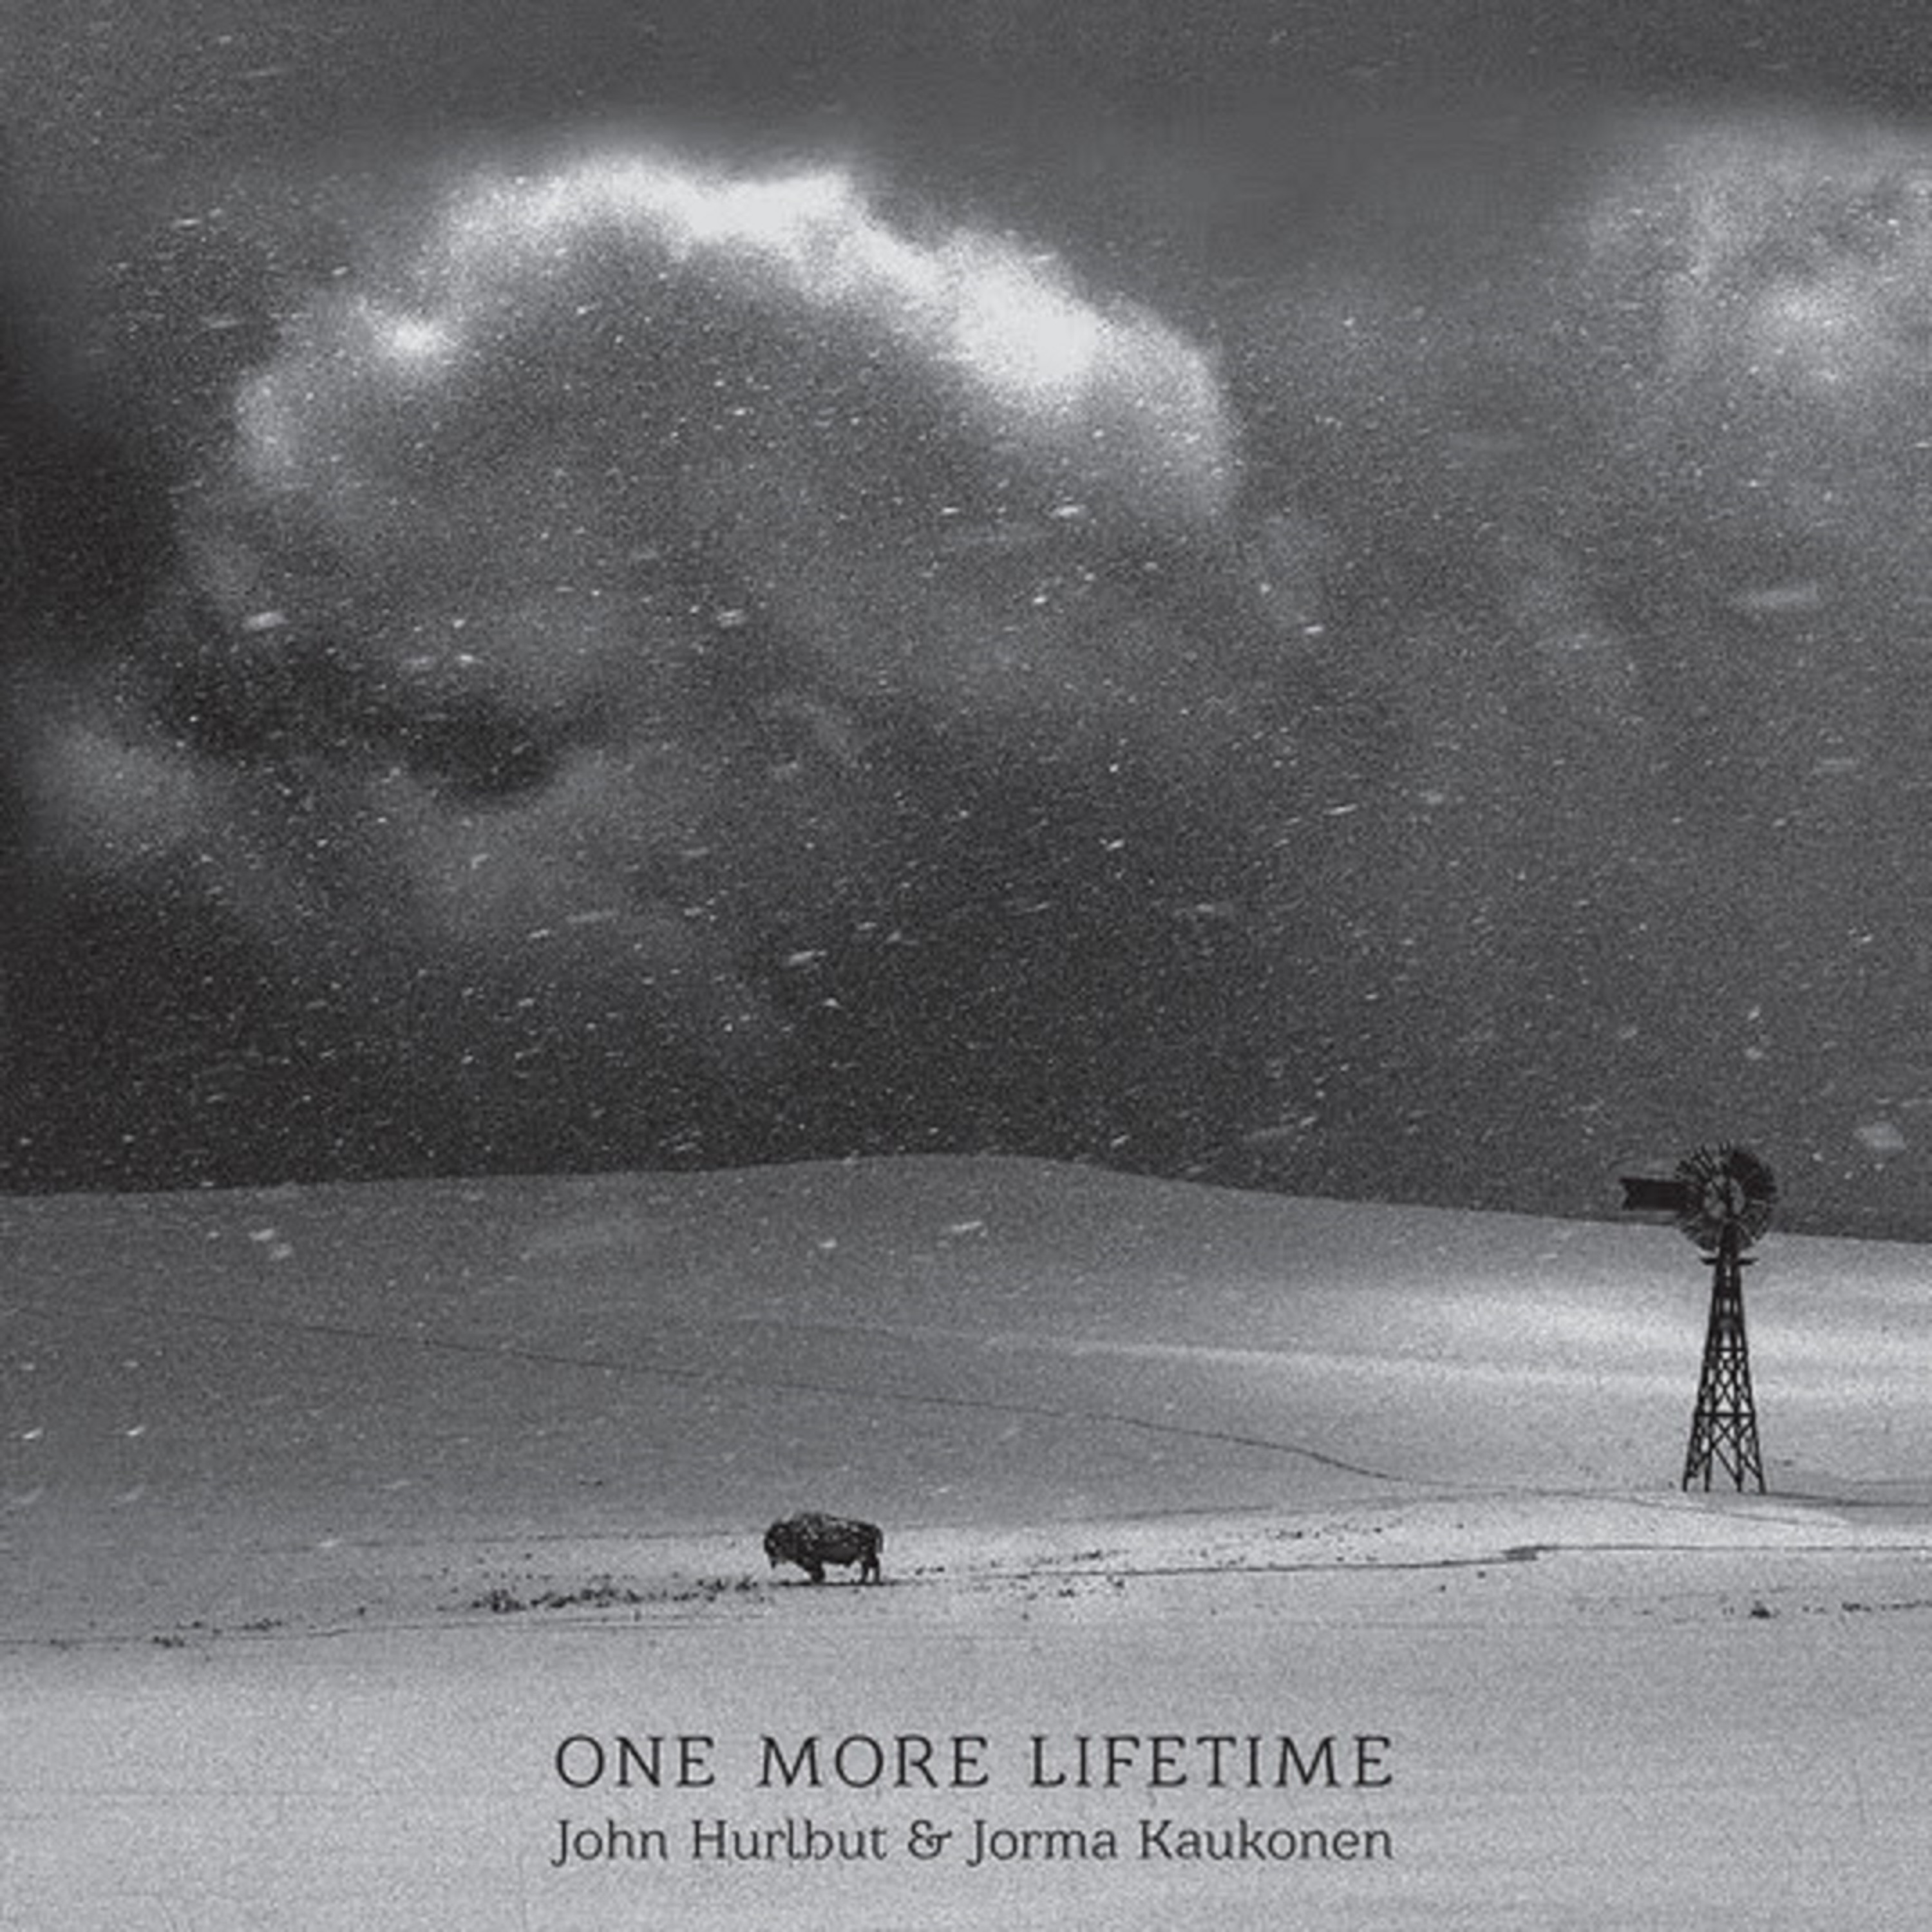 Jorma Kaukonen and John Hurlbut Release Third Album, One More Lifetime